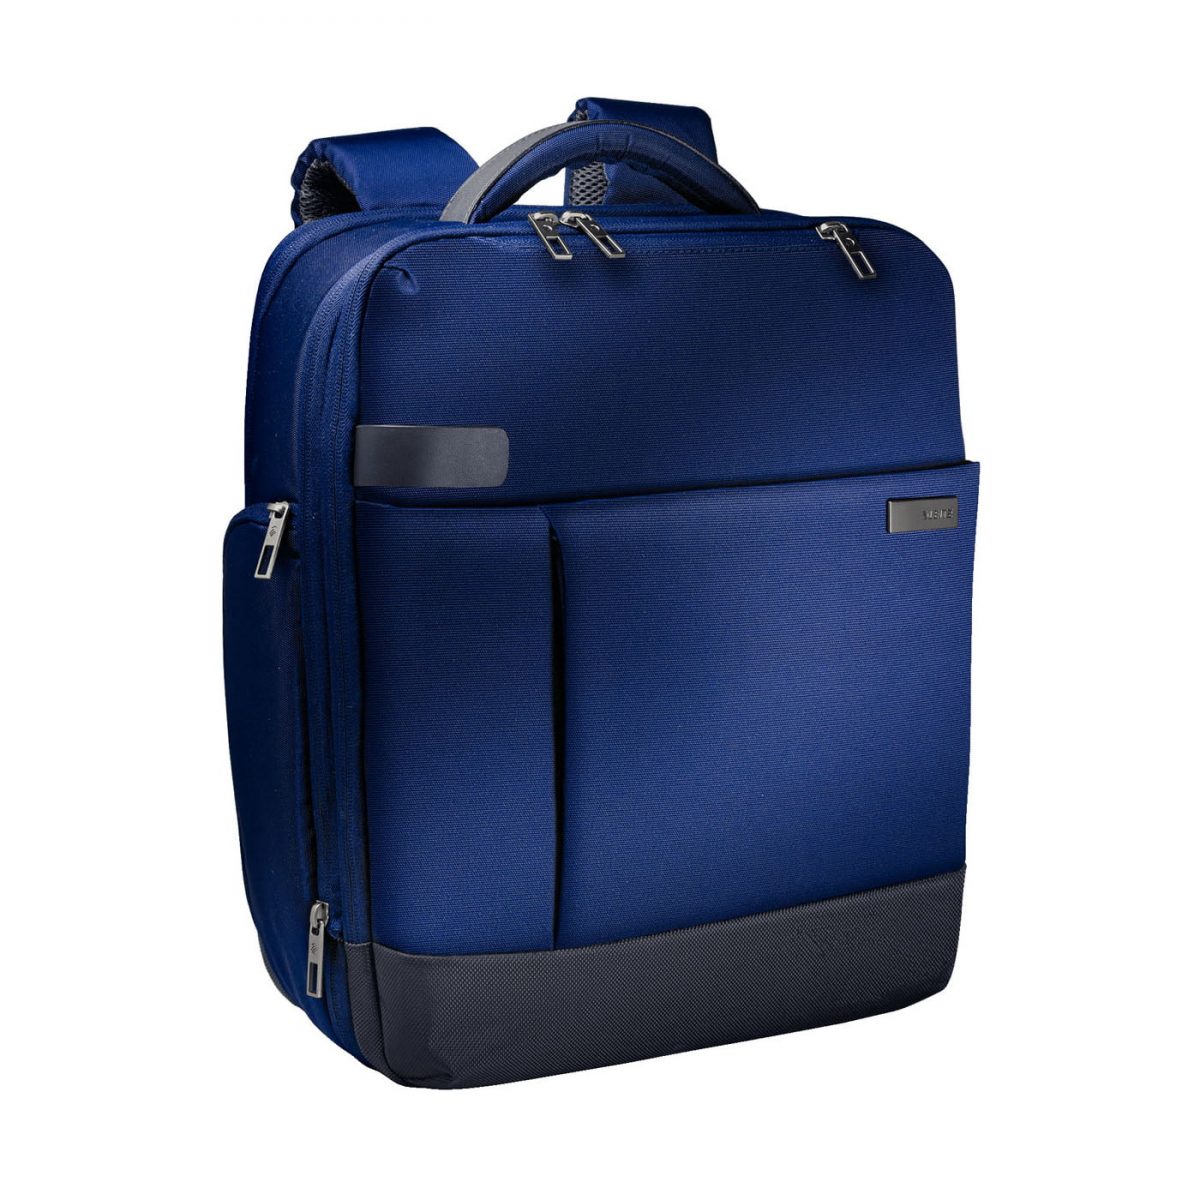 Rucsac LEITZ Complete pentru Laptop 15,6 inch Smart Traveller - albastru/violet